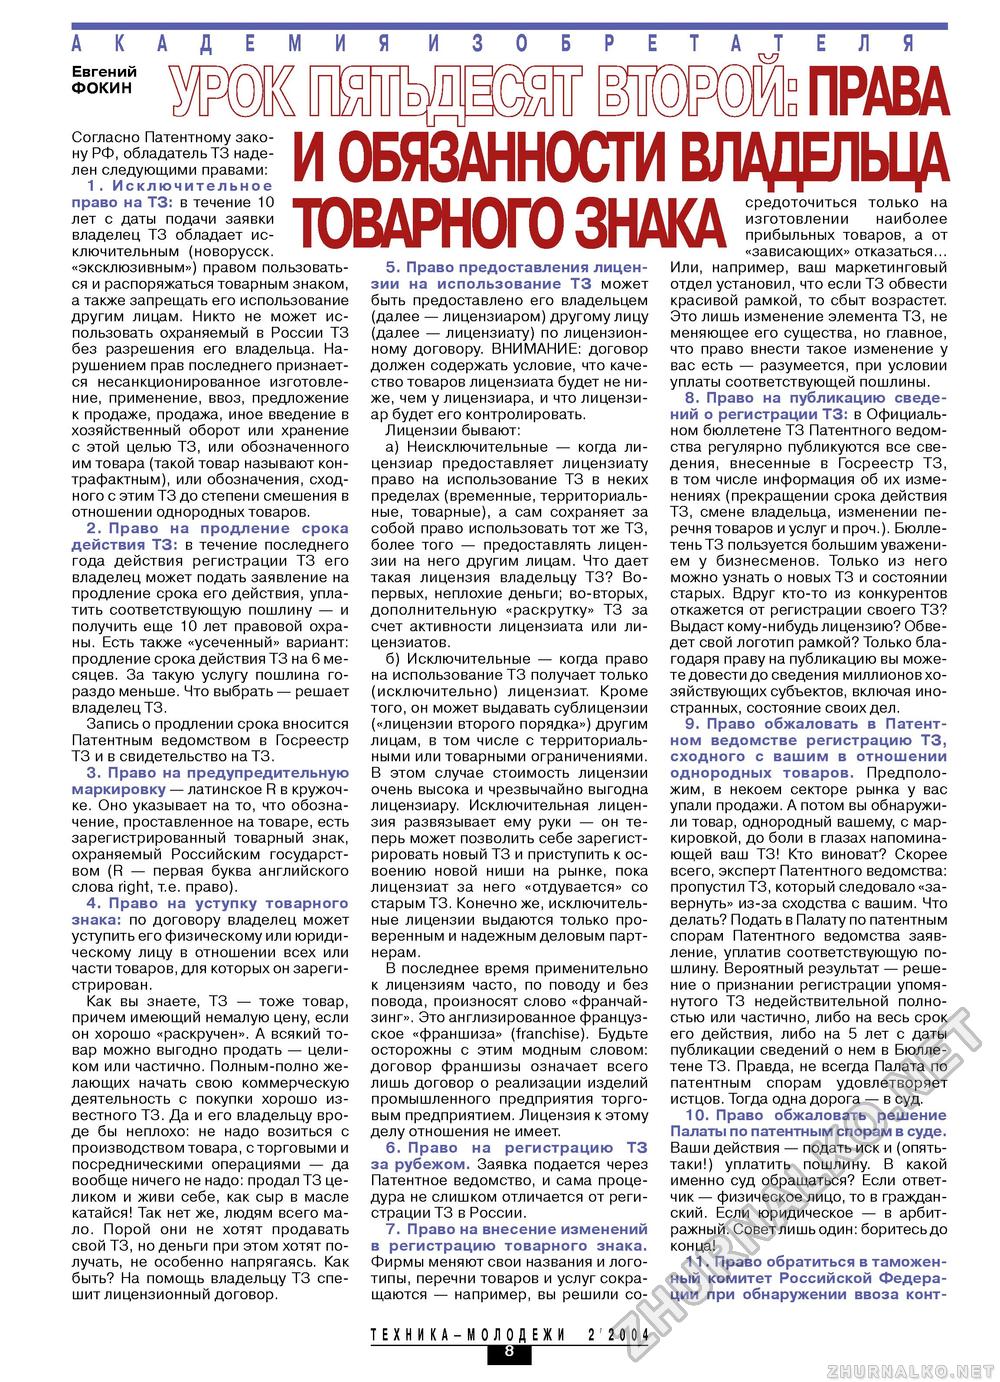 Техника - молодёжи 2004-02, страница 10